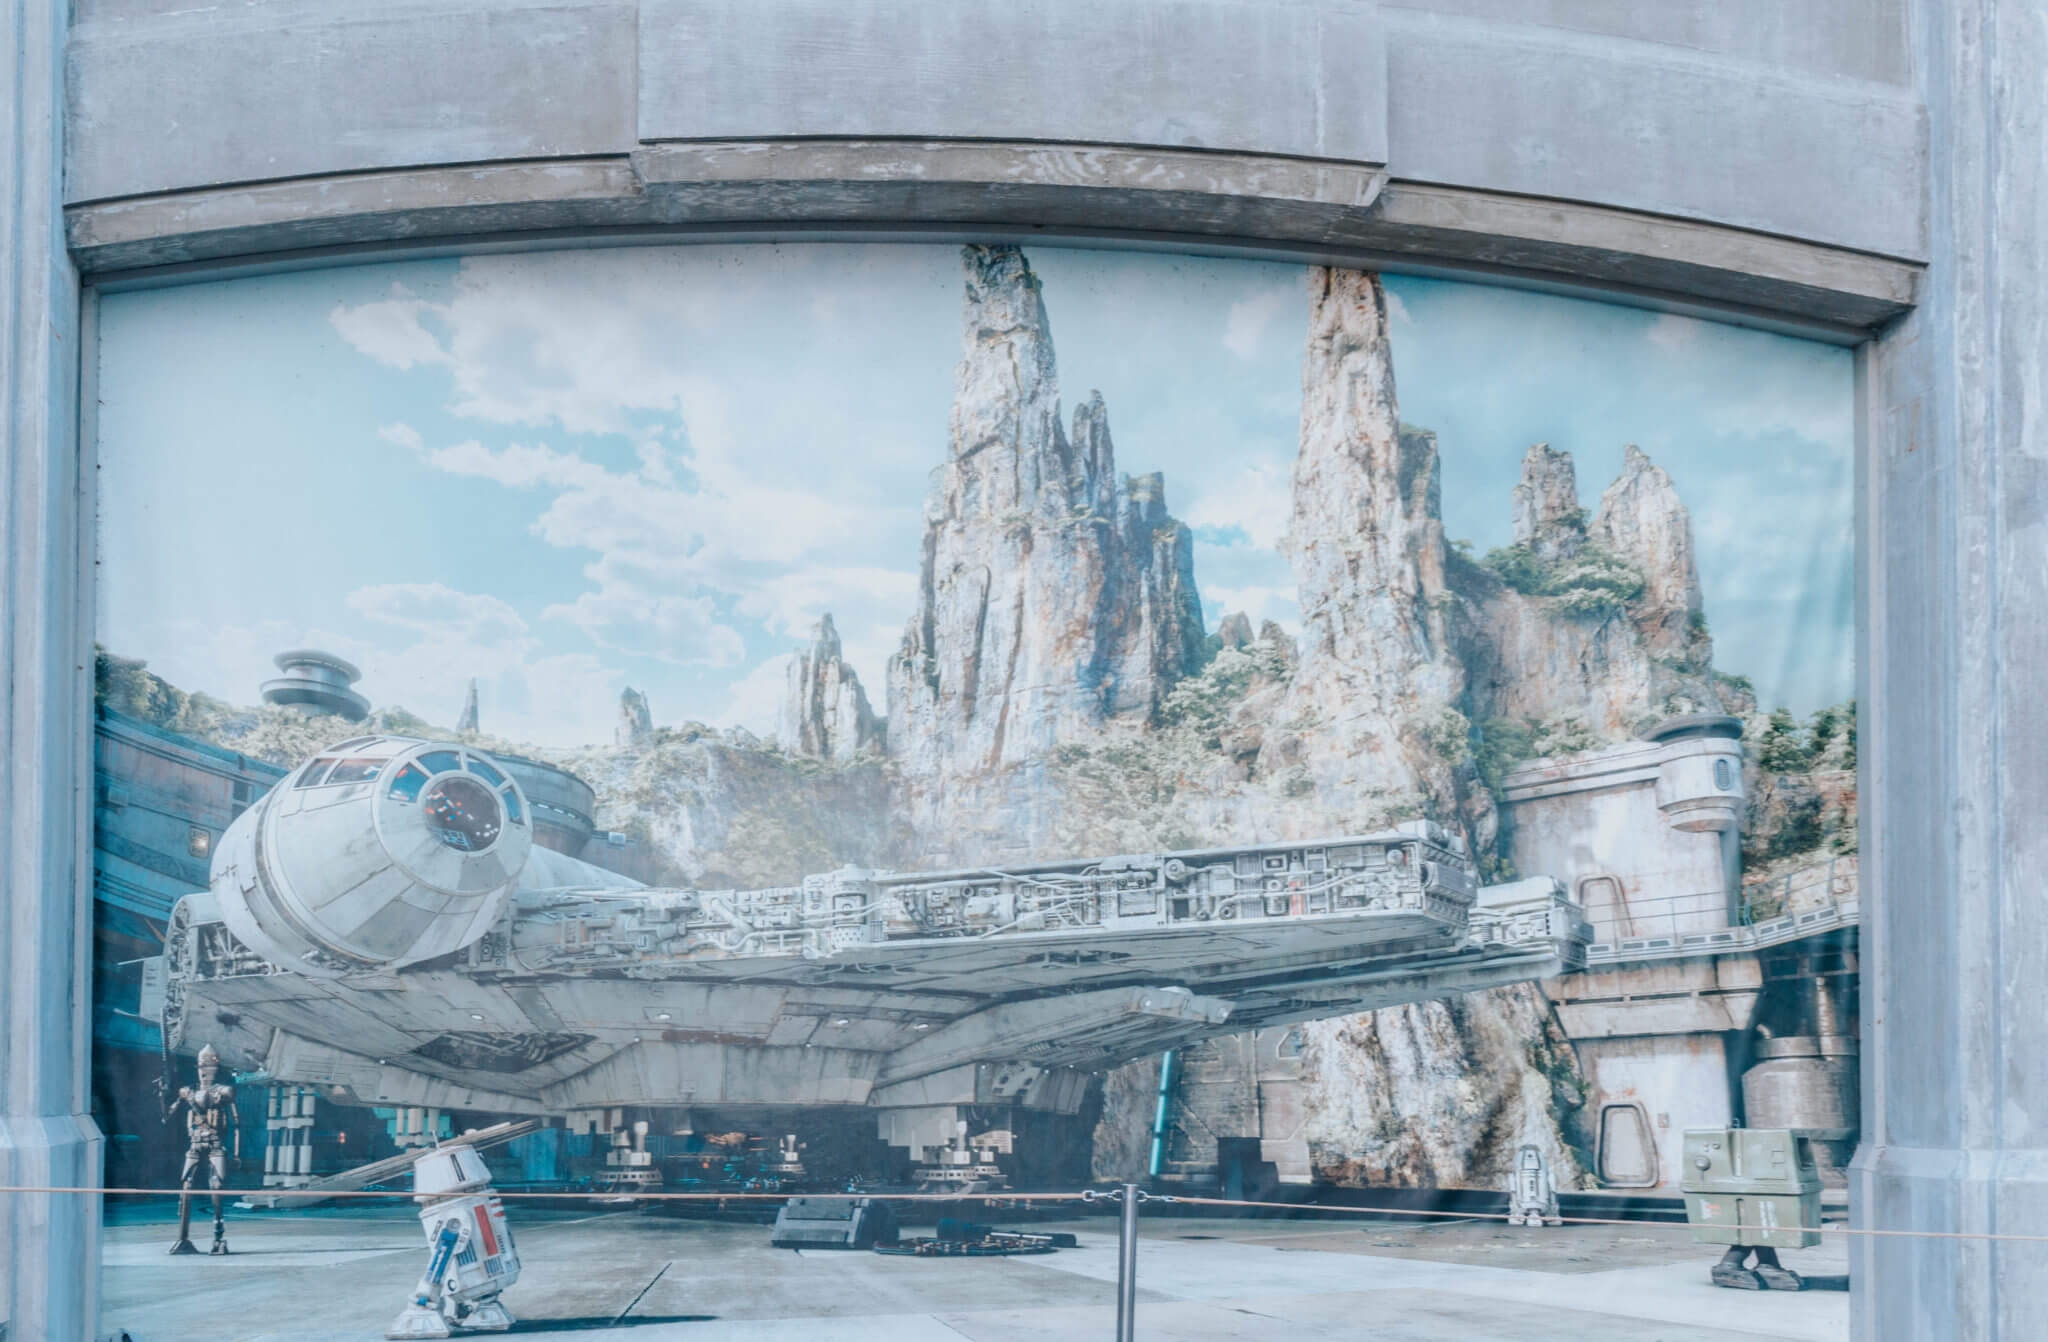 Entrance to Star Wars: Galaxy's Edge at Hollywood Studios